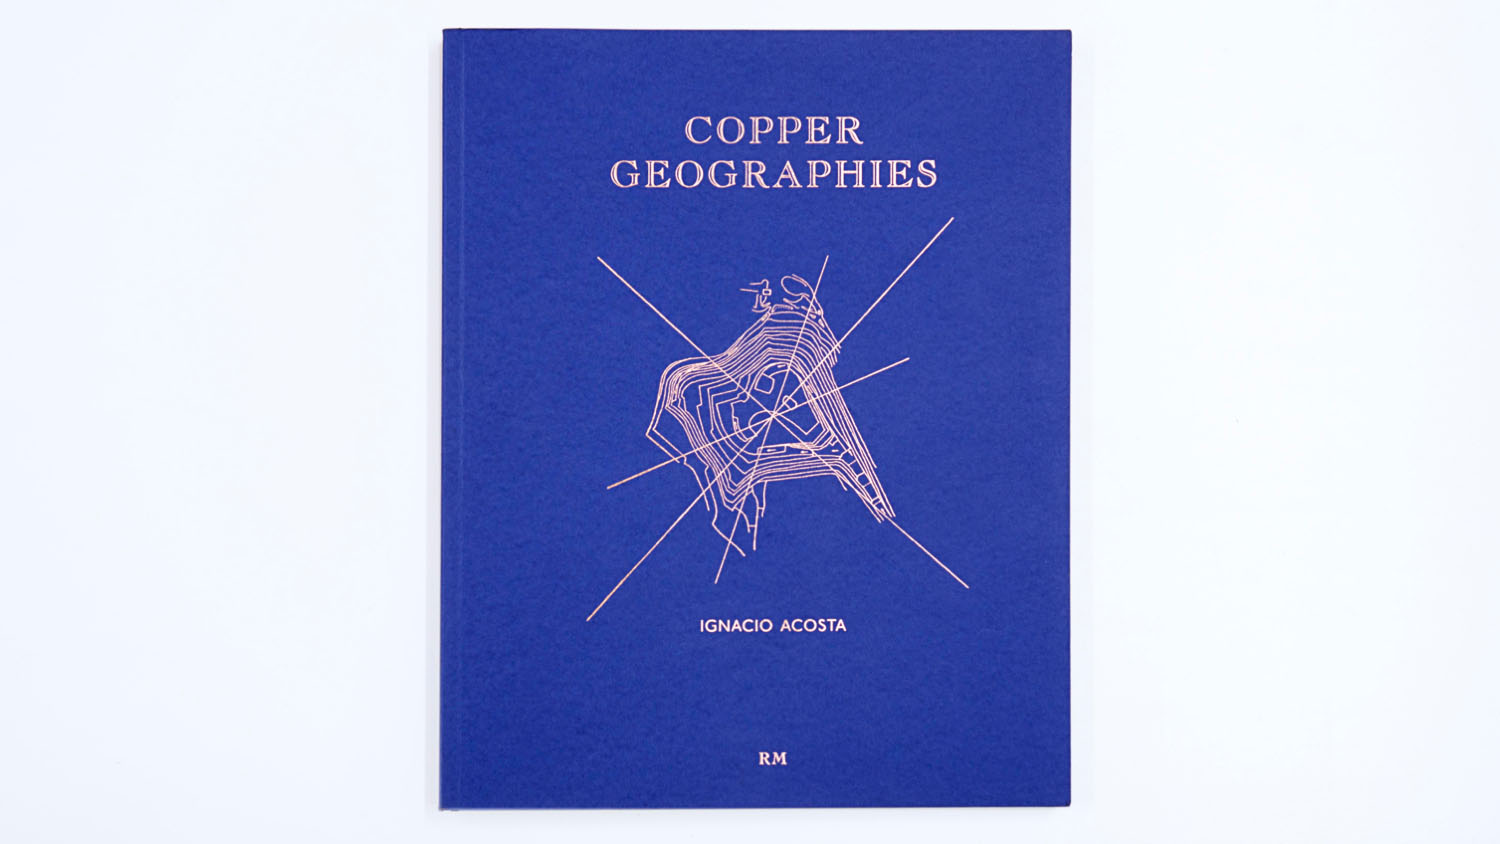 Ignacio Acosta Copper Geographies, Editorial RM (Barcelona, México), 2018